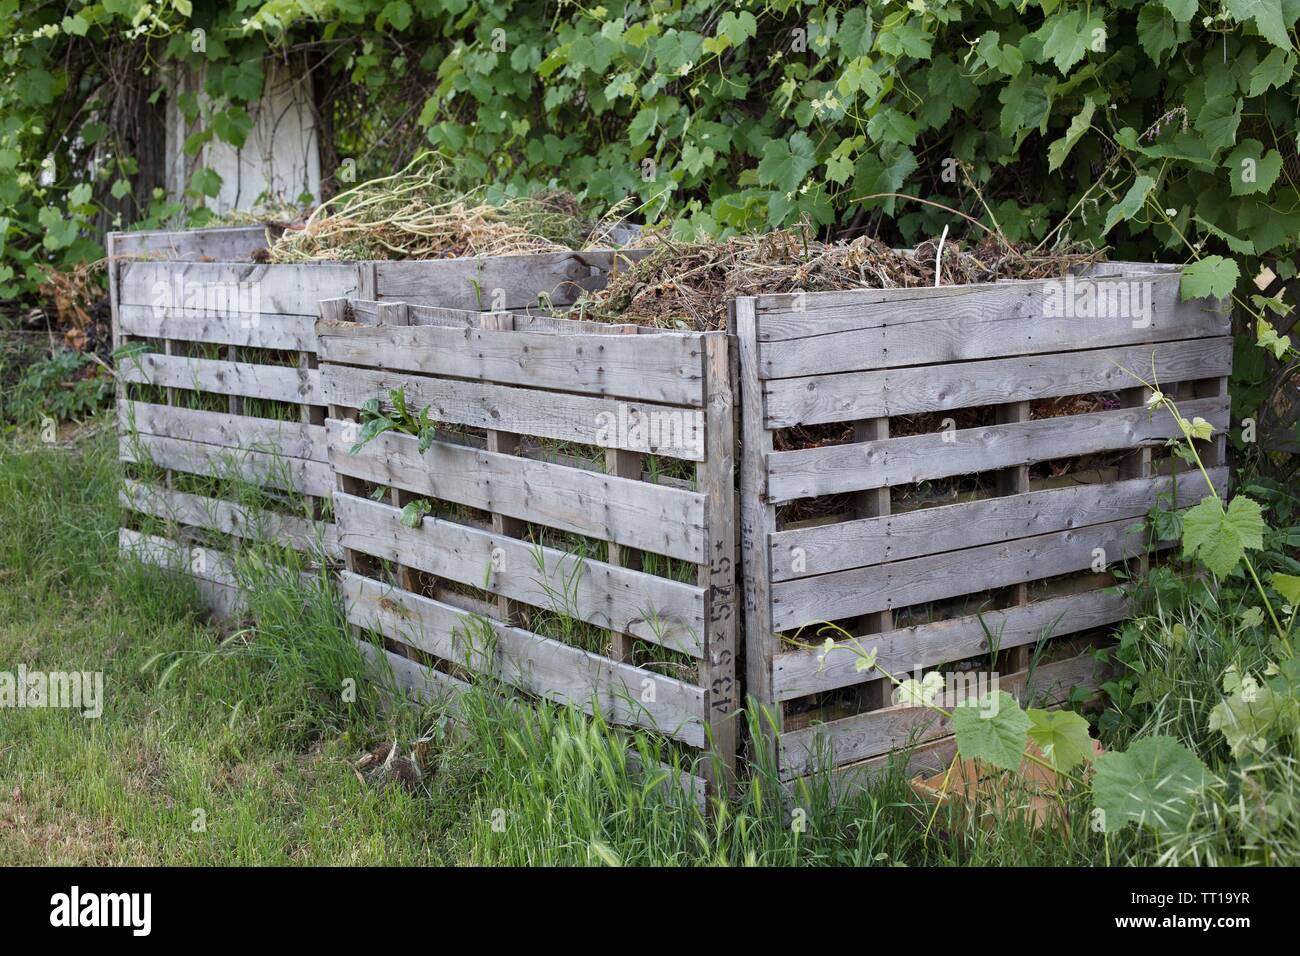 https://c8.alamy.com/comp/TT19YR/large-backyard-wooden-garden-waste-composting-bin-TT19YR.jpg